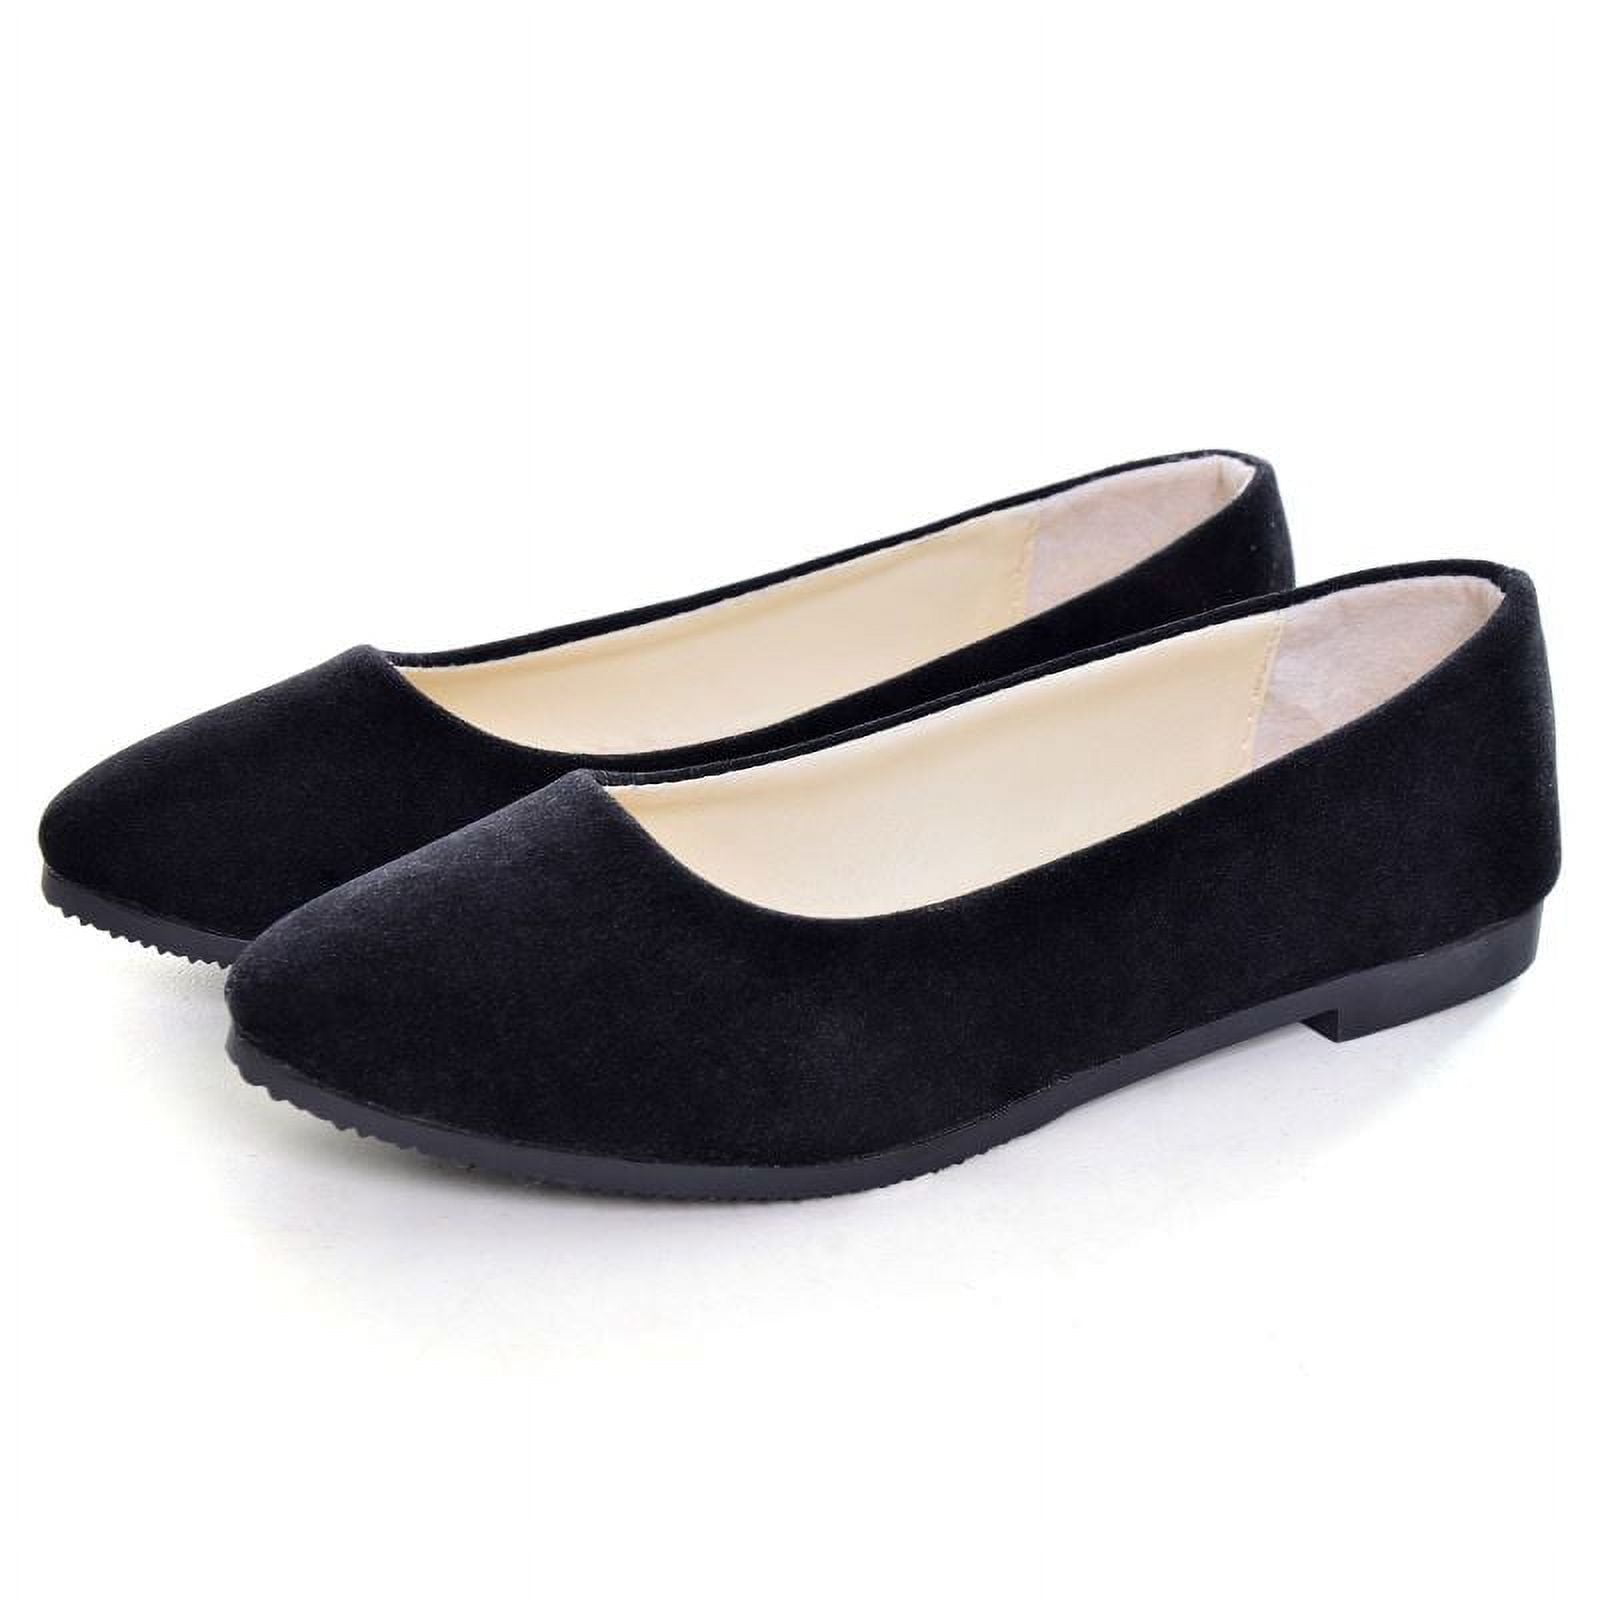 SAILING LU Women Flat Shoes Comfortable Slip on Multi-color Pointed Toe  Ballet Flats Black US 8.5 